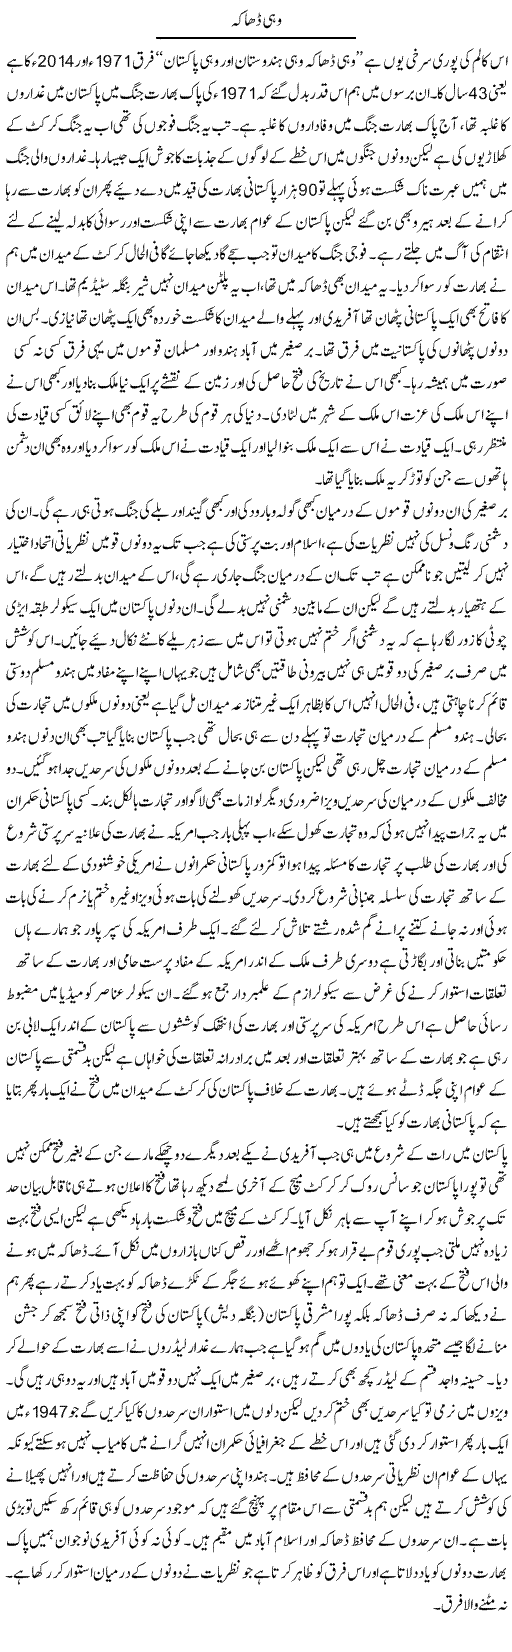 Wohi Shaka | Abdul Qadir Hassan | Daily Urdu Columns